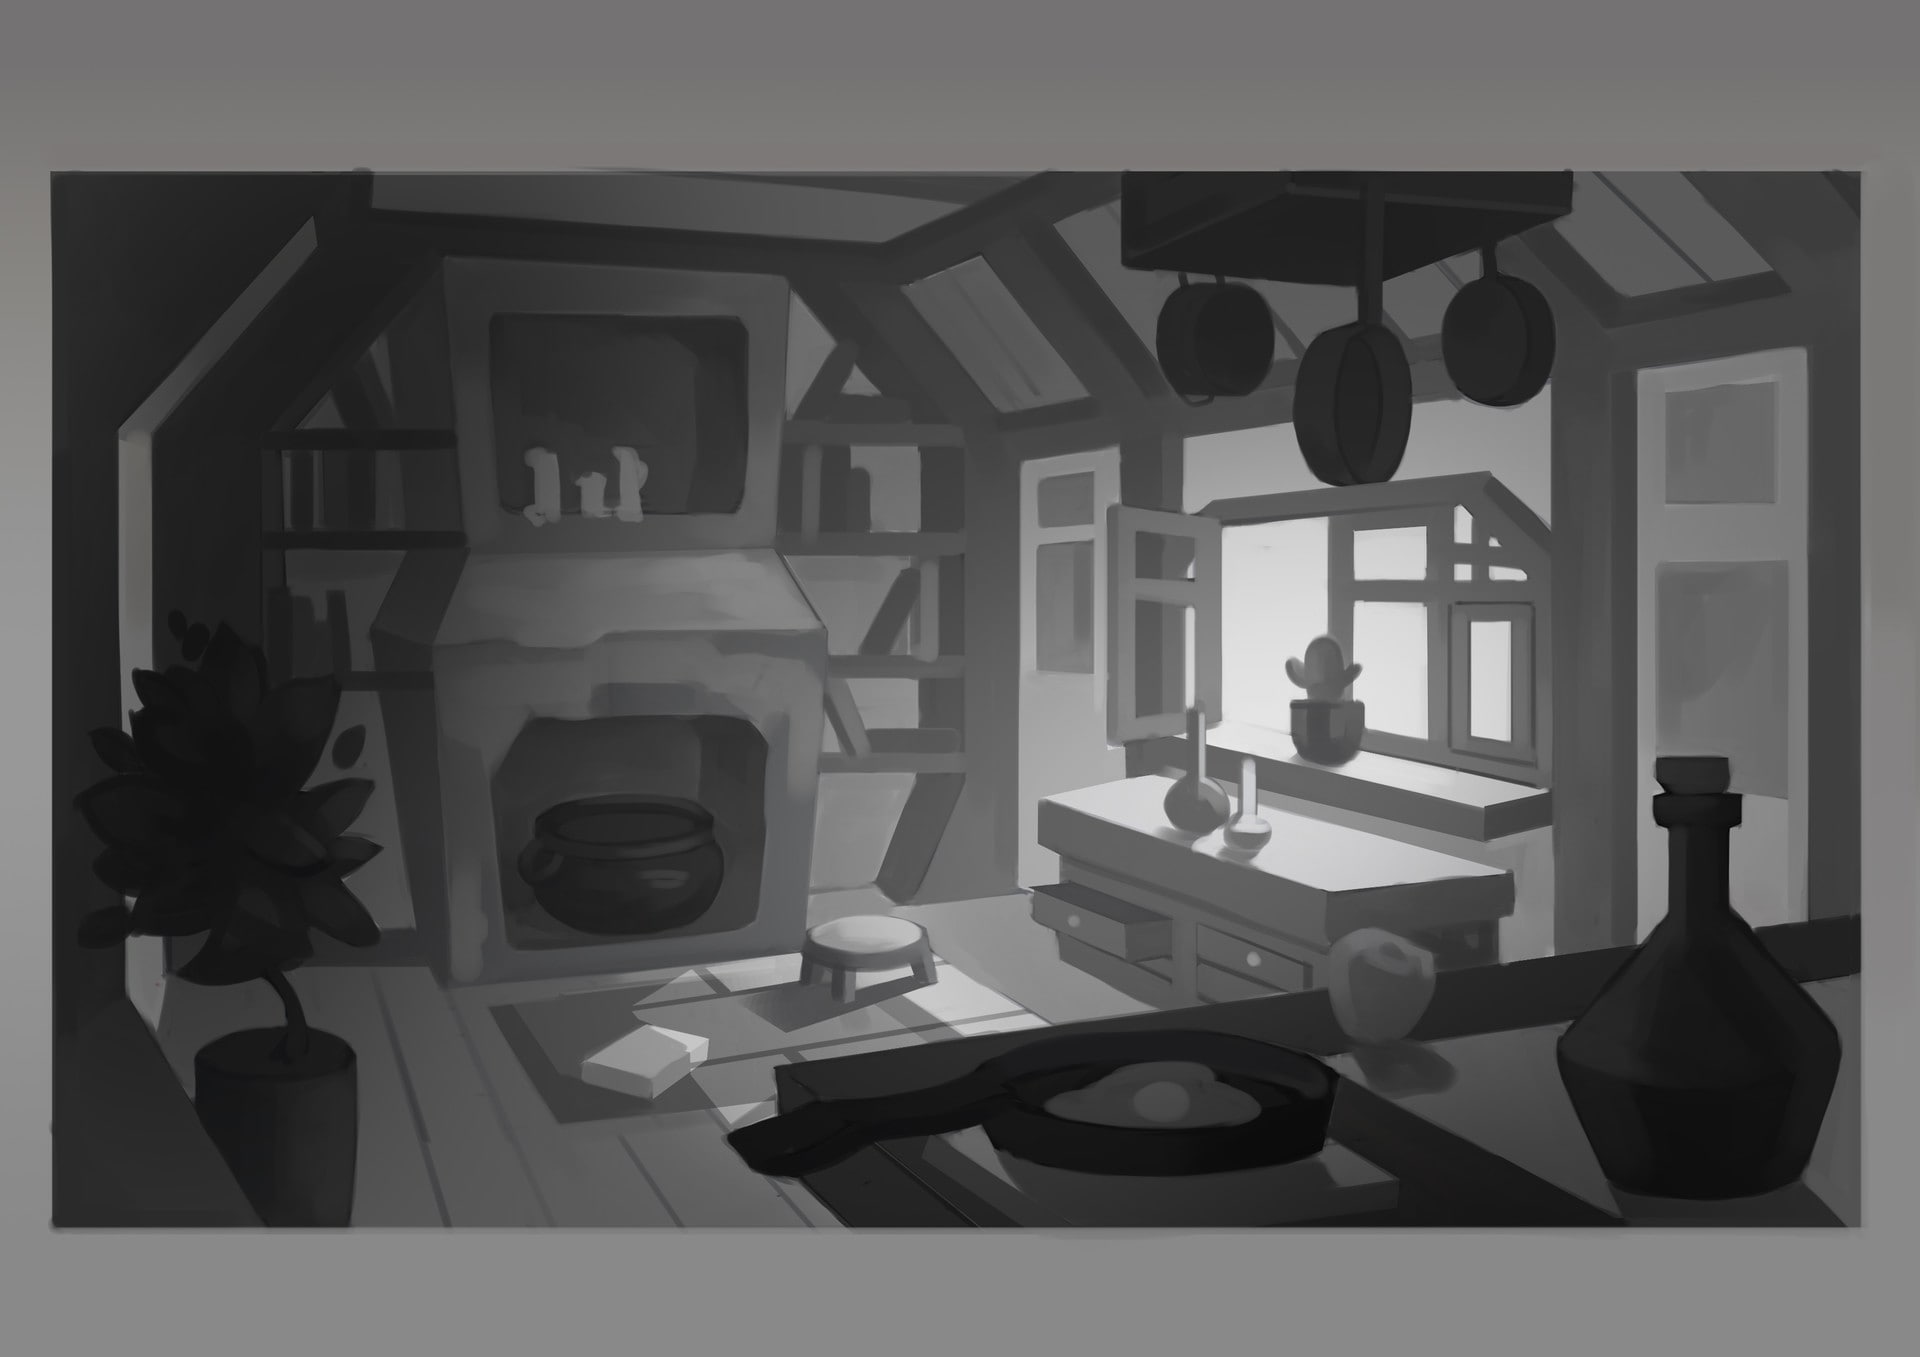 A hobbit's kitchen environment